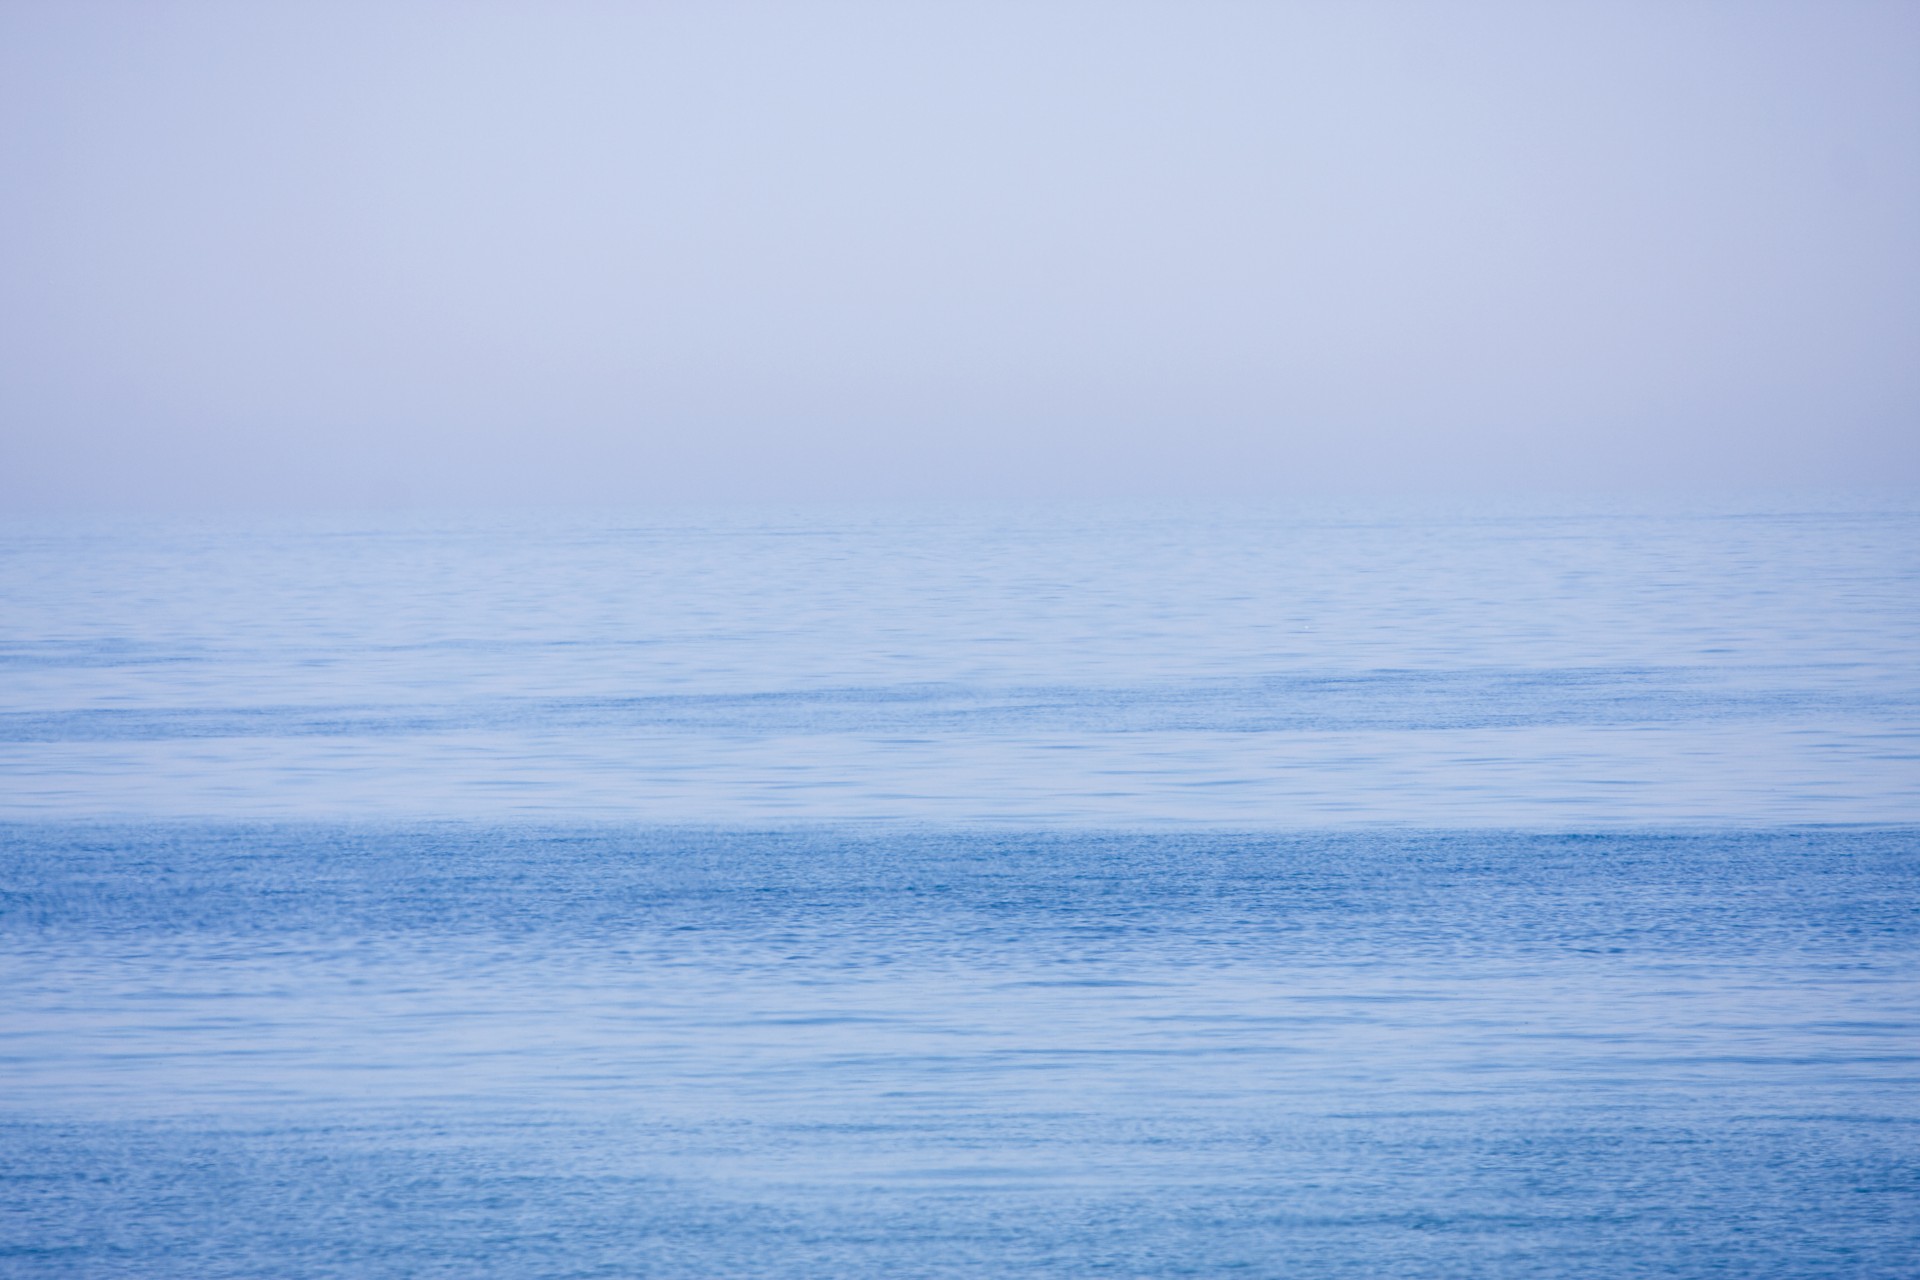 Ocean is beautiful. Фон море. Спокойное море. Морской фон. Фон для презентации море.